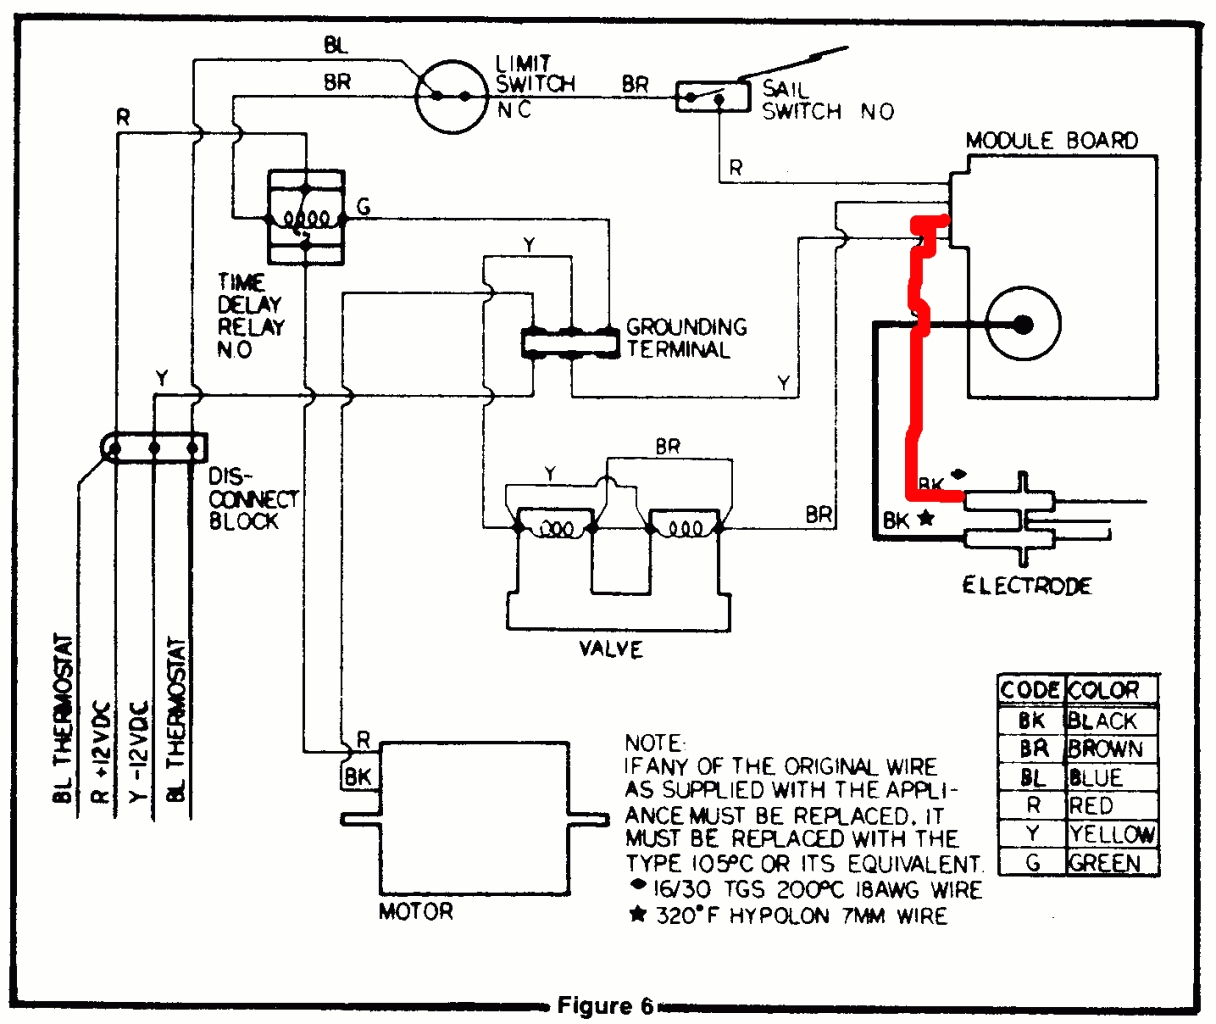 Water Heater thermostat Wiring Diagram Wiring Diagram atwood Furnace Wiring Diagram Article Review